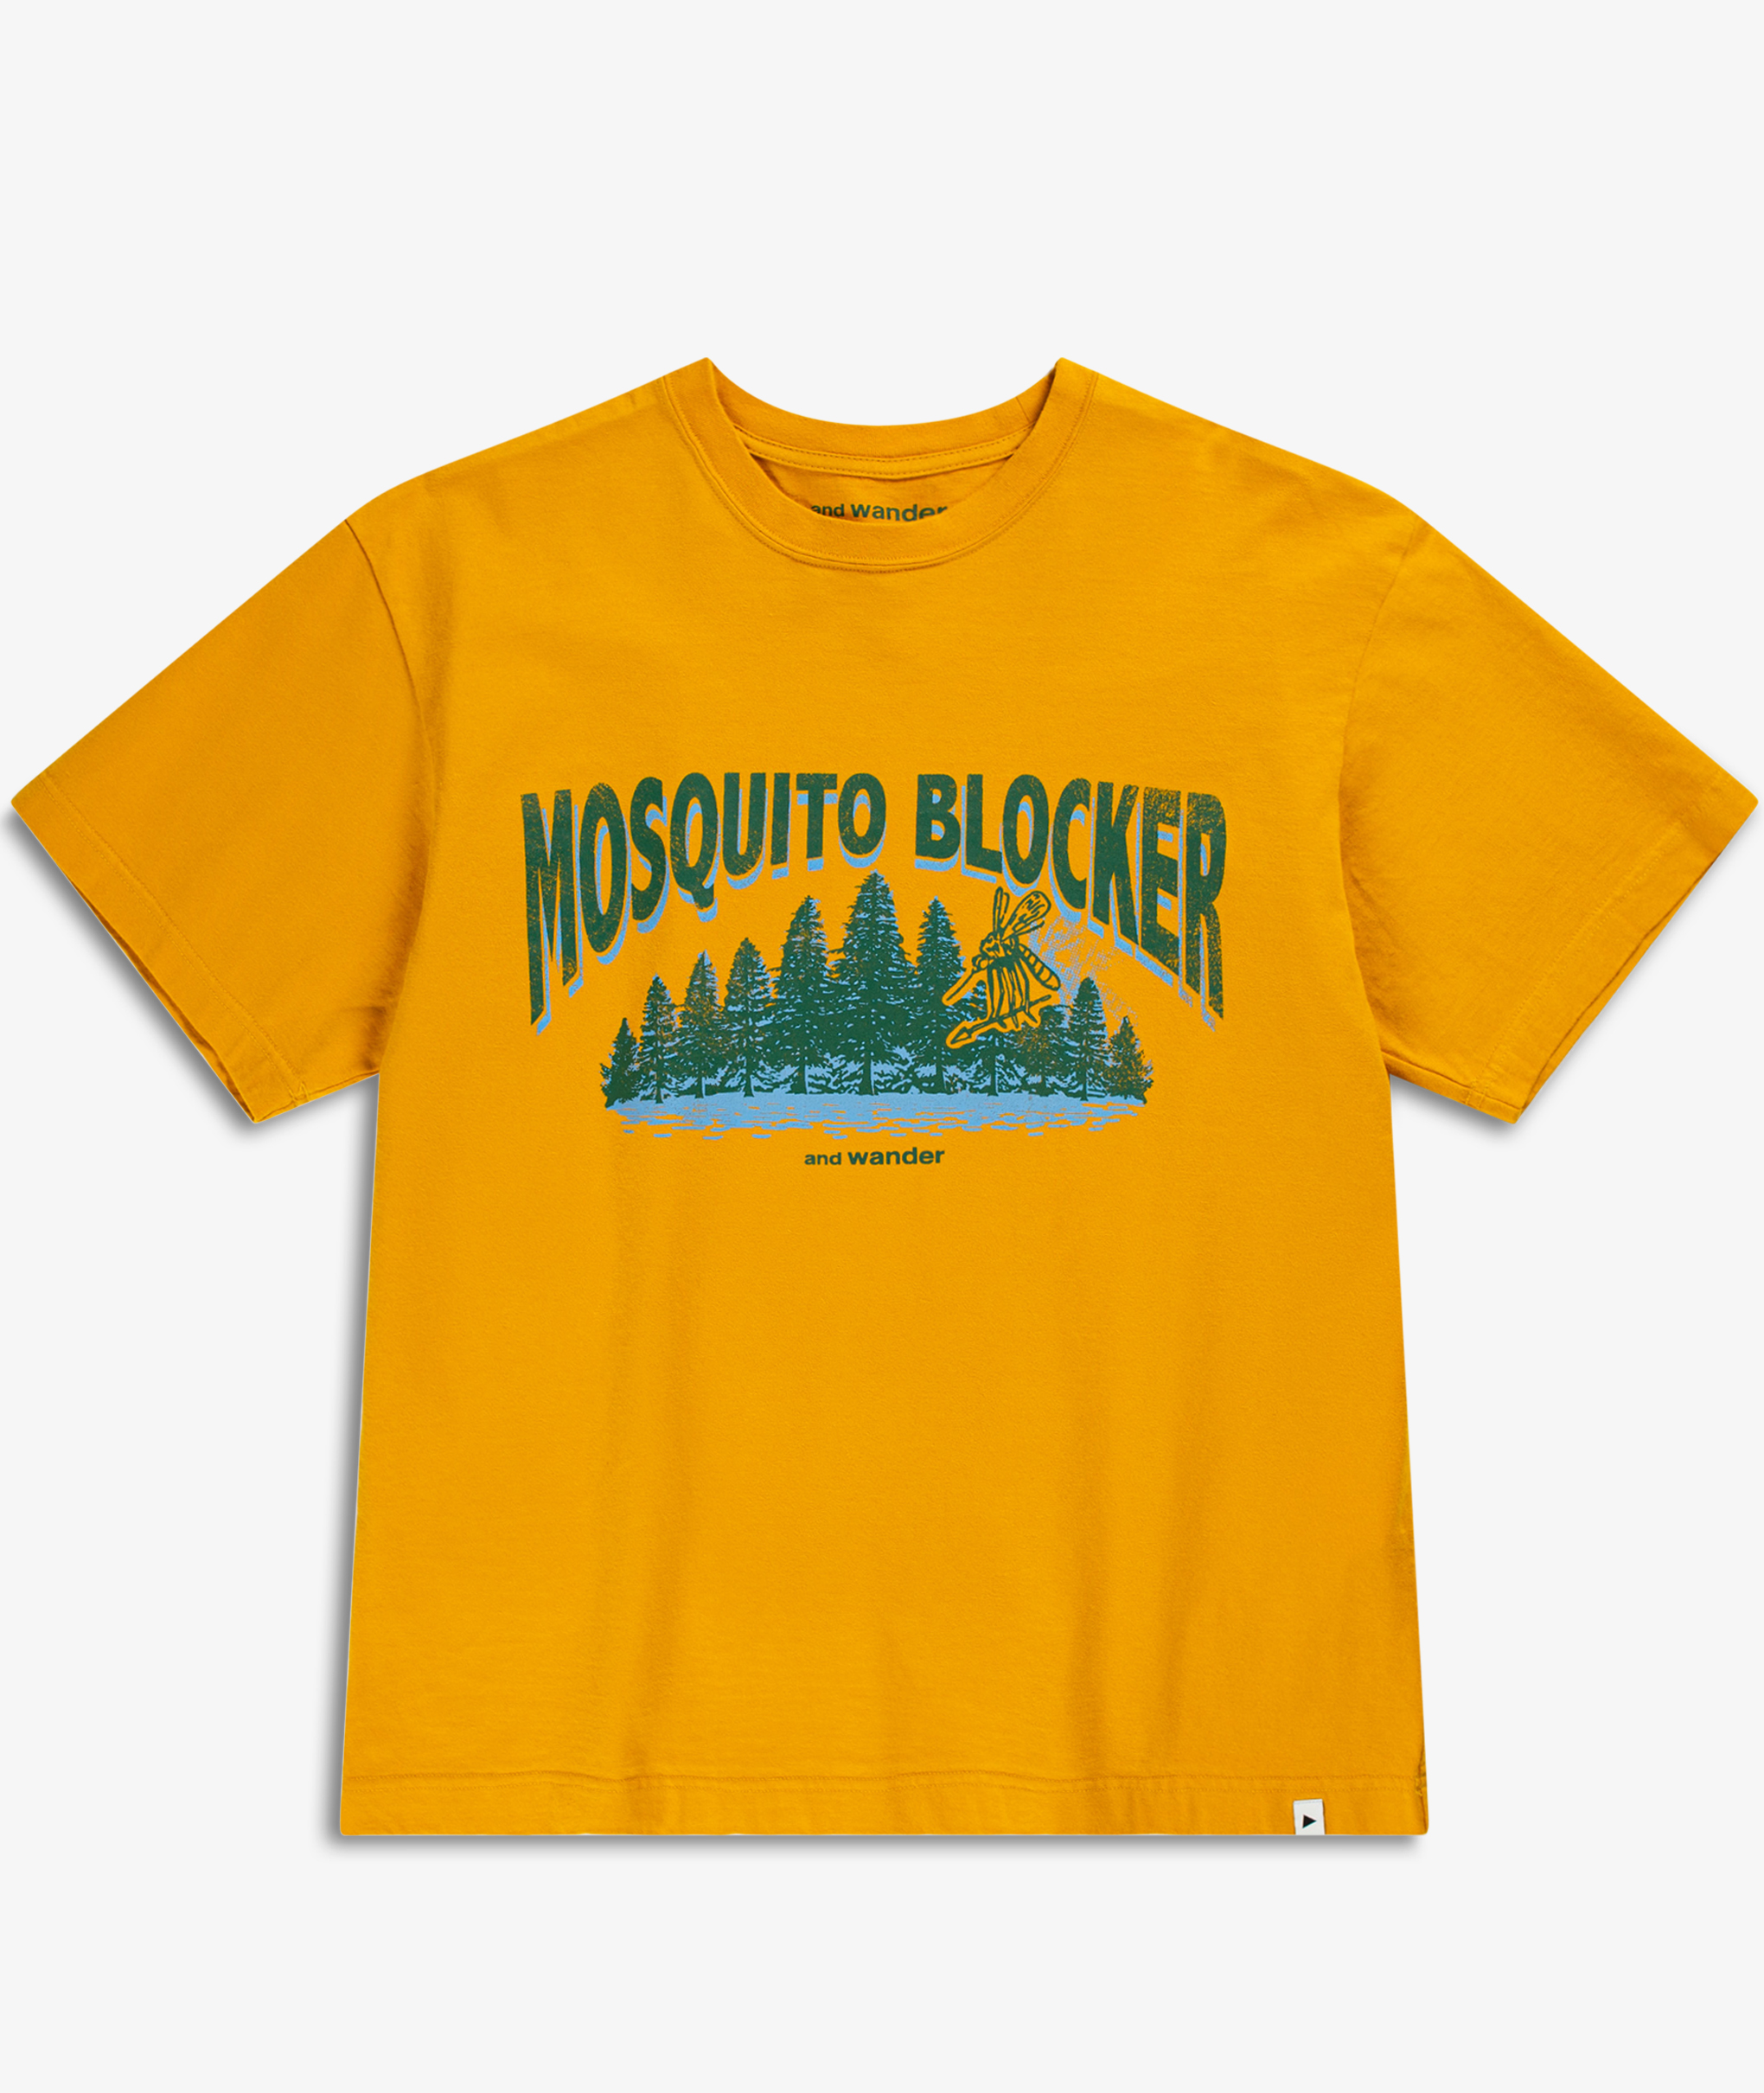 Norse Store Shipping Worldwide And Wander Mosquito Blocker T Shirt